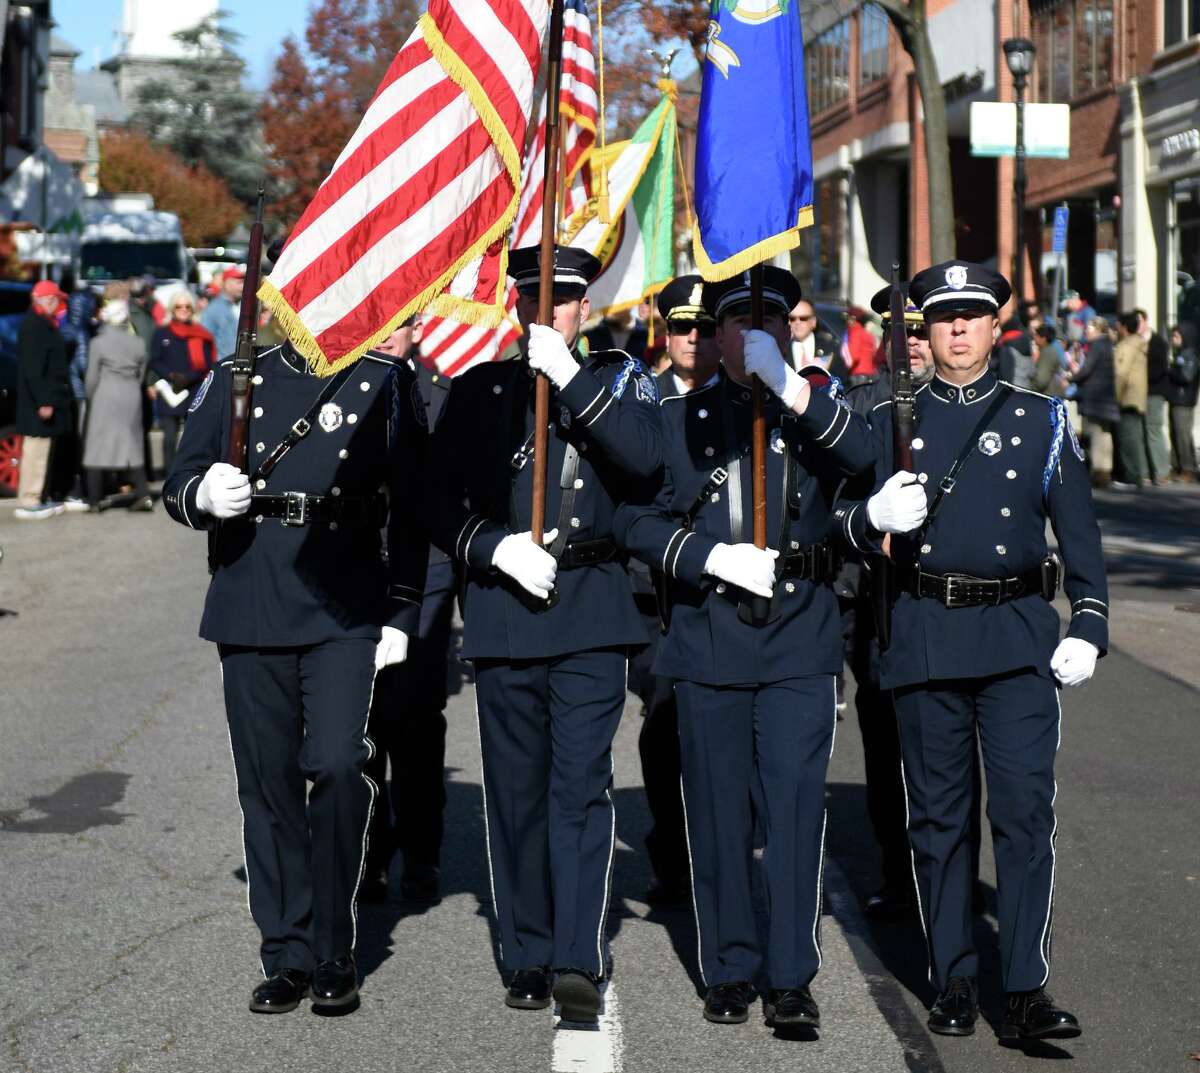 Greenwich Police march in the annual Veterans Day Patriotic Walk down Greenwich Avenue in Greenwich, Conn. Sunday, Nov. 11, 2018.